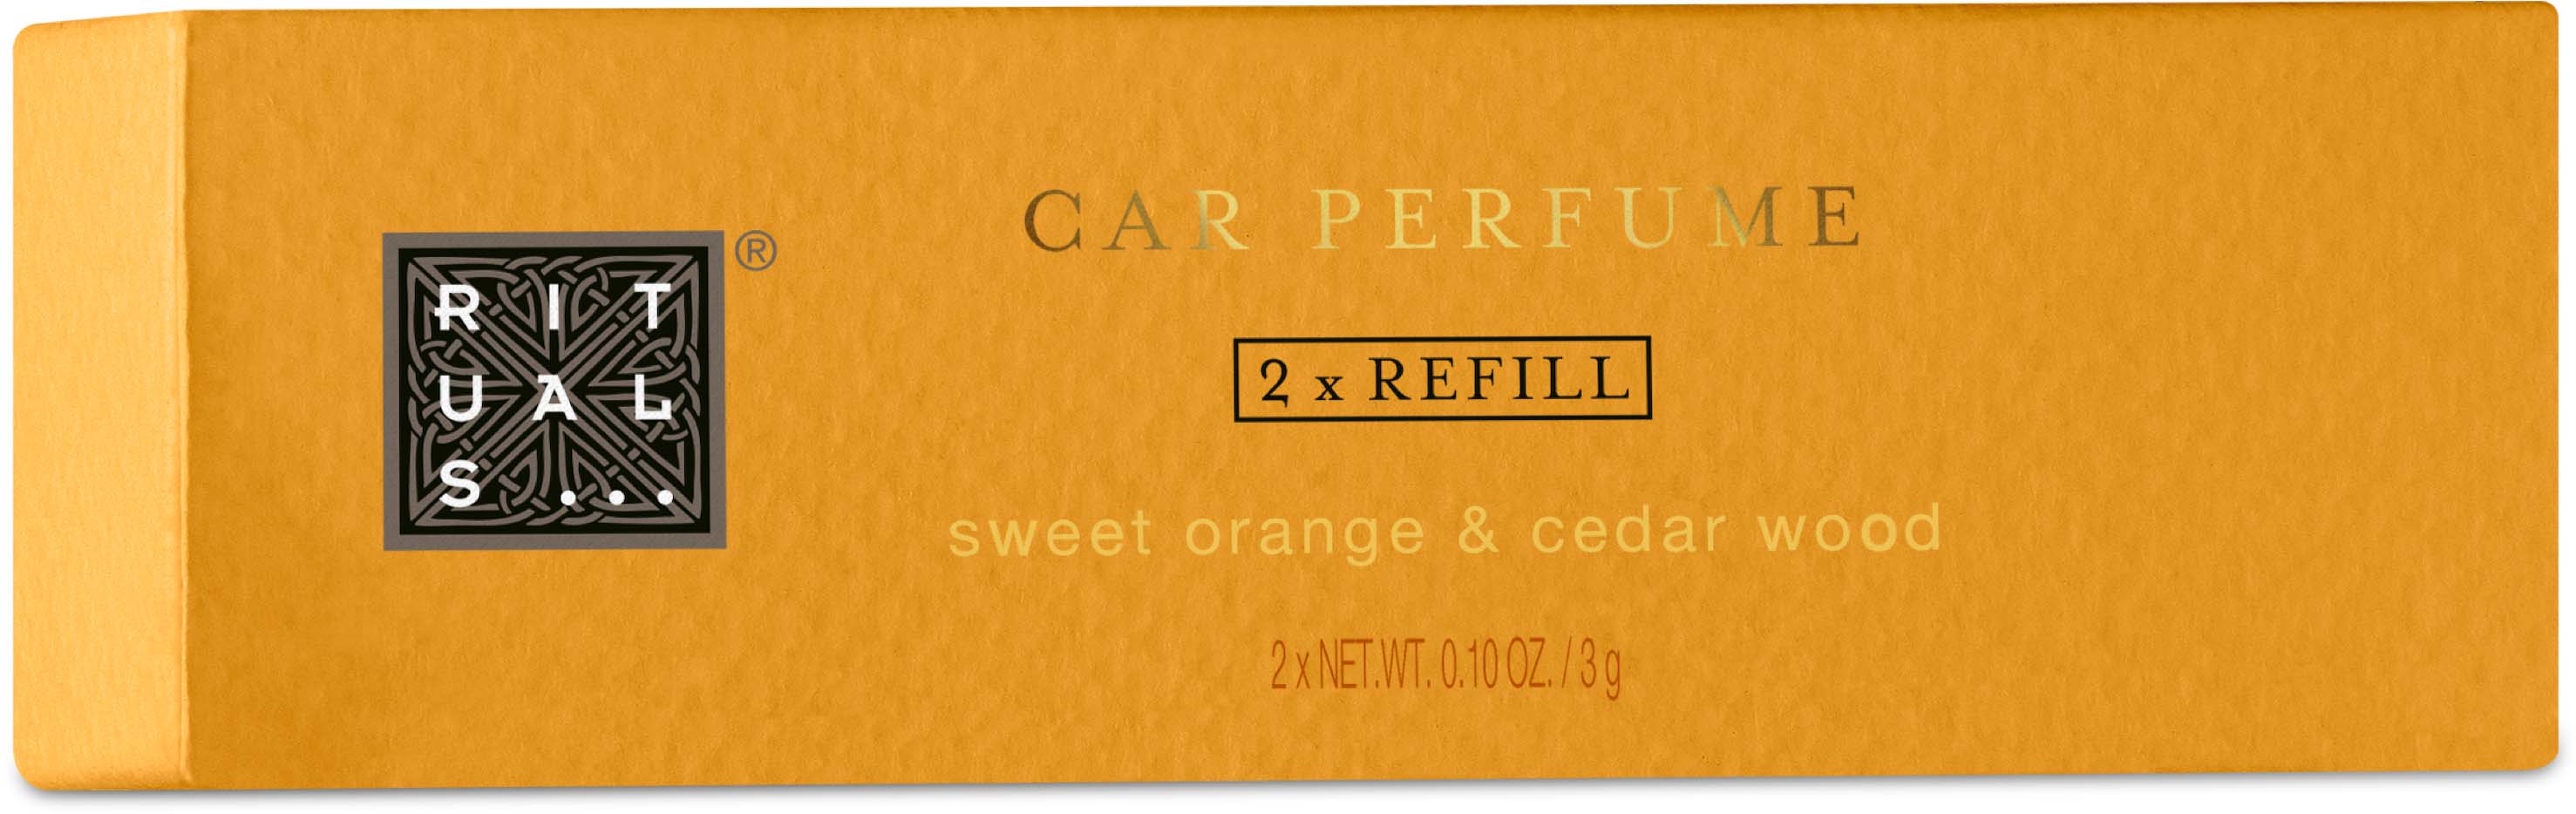 RITUALS The Ritual of Mehr Car Perfume Refill Set